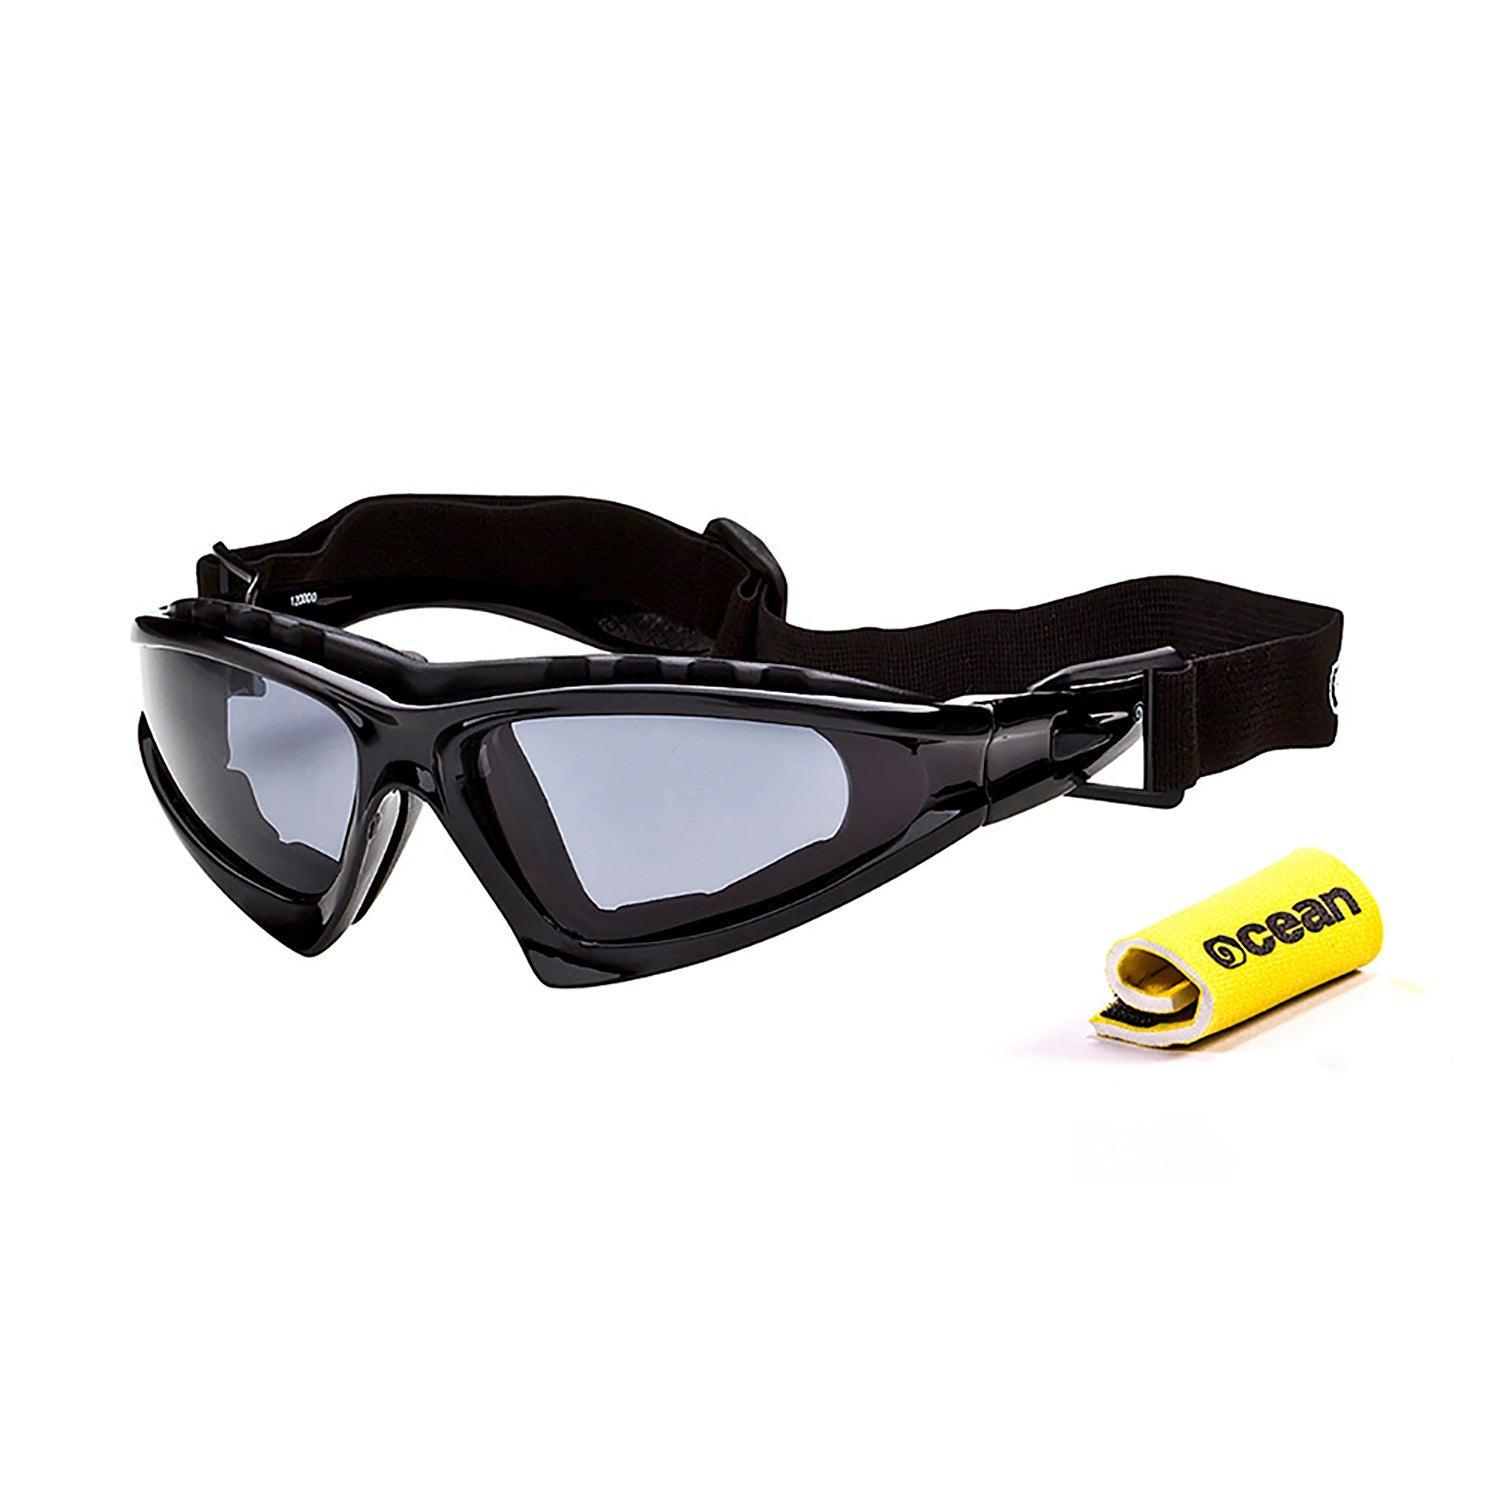 Ocean Cabarete Polarized Water Sports Sunglasses - Black Satin - Smoke